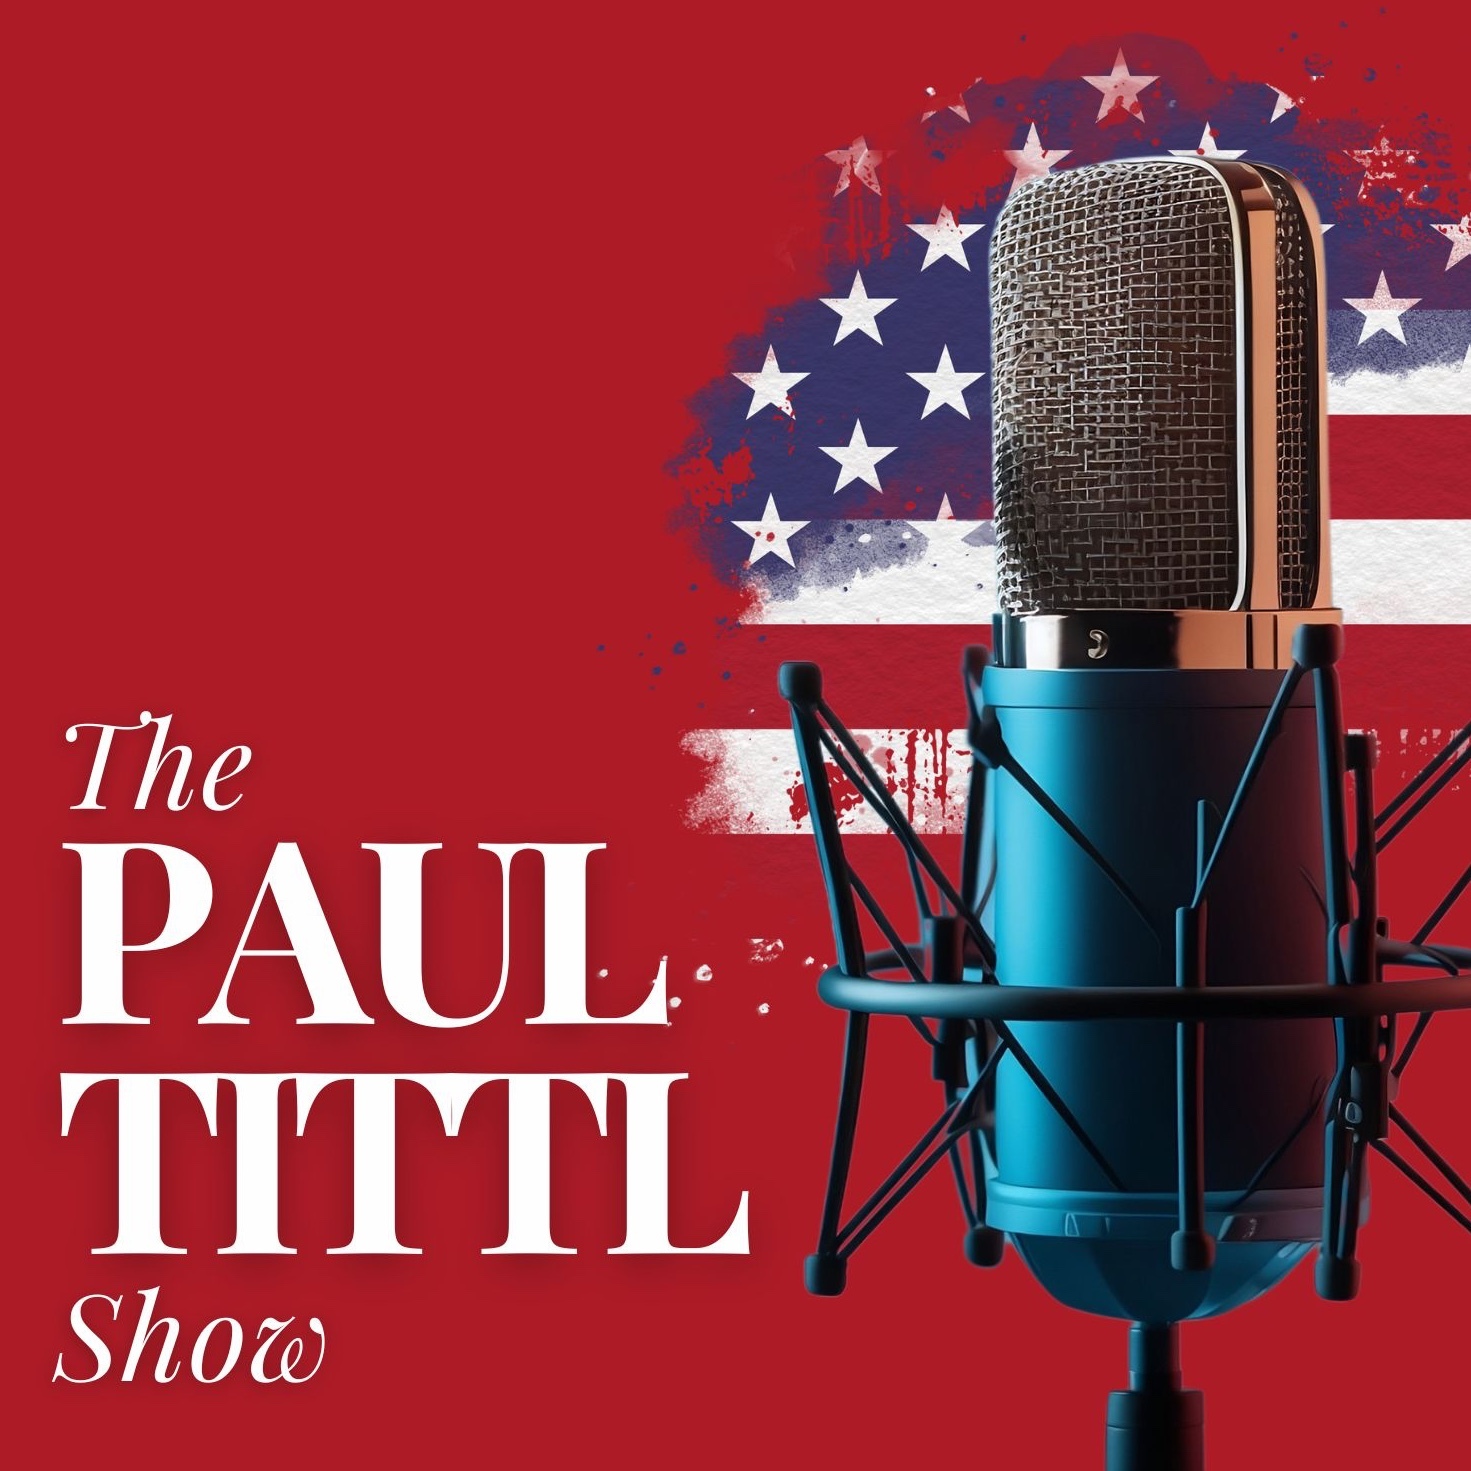 The Paul Tittl Show